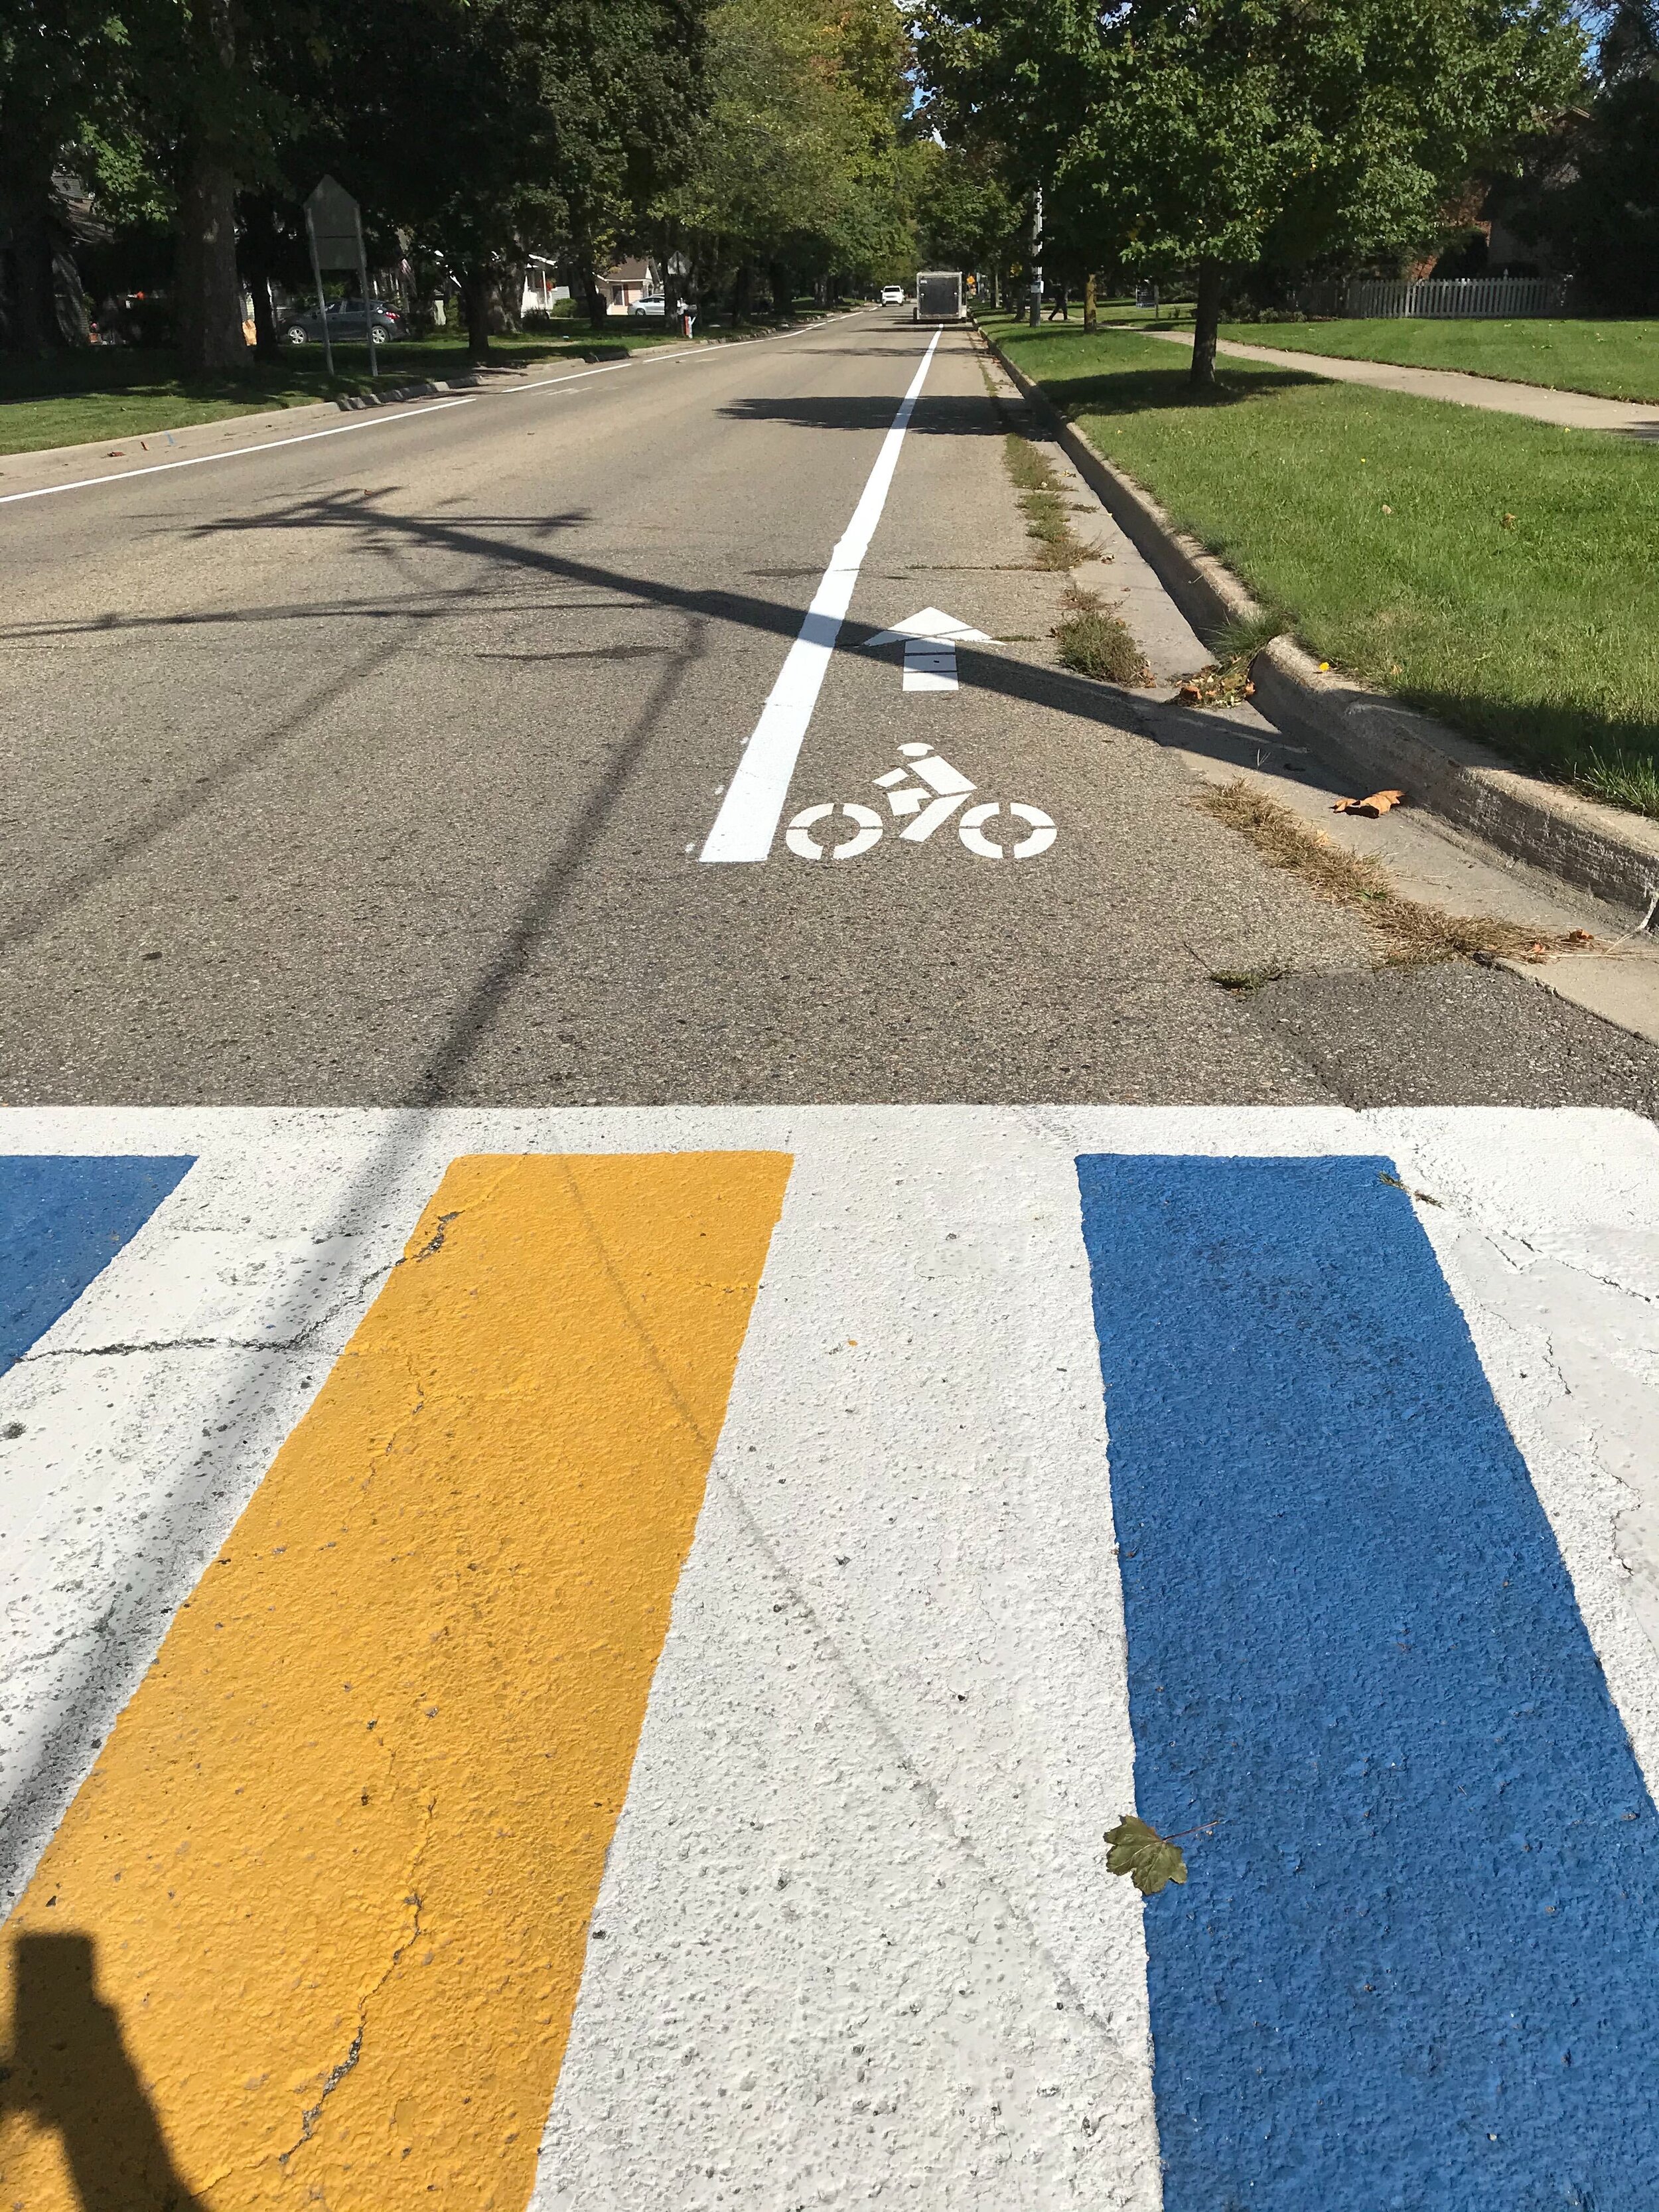 Bike lanes nearing crosswalk